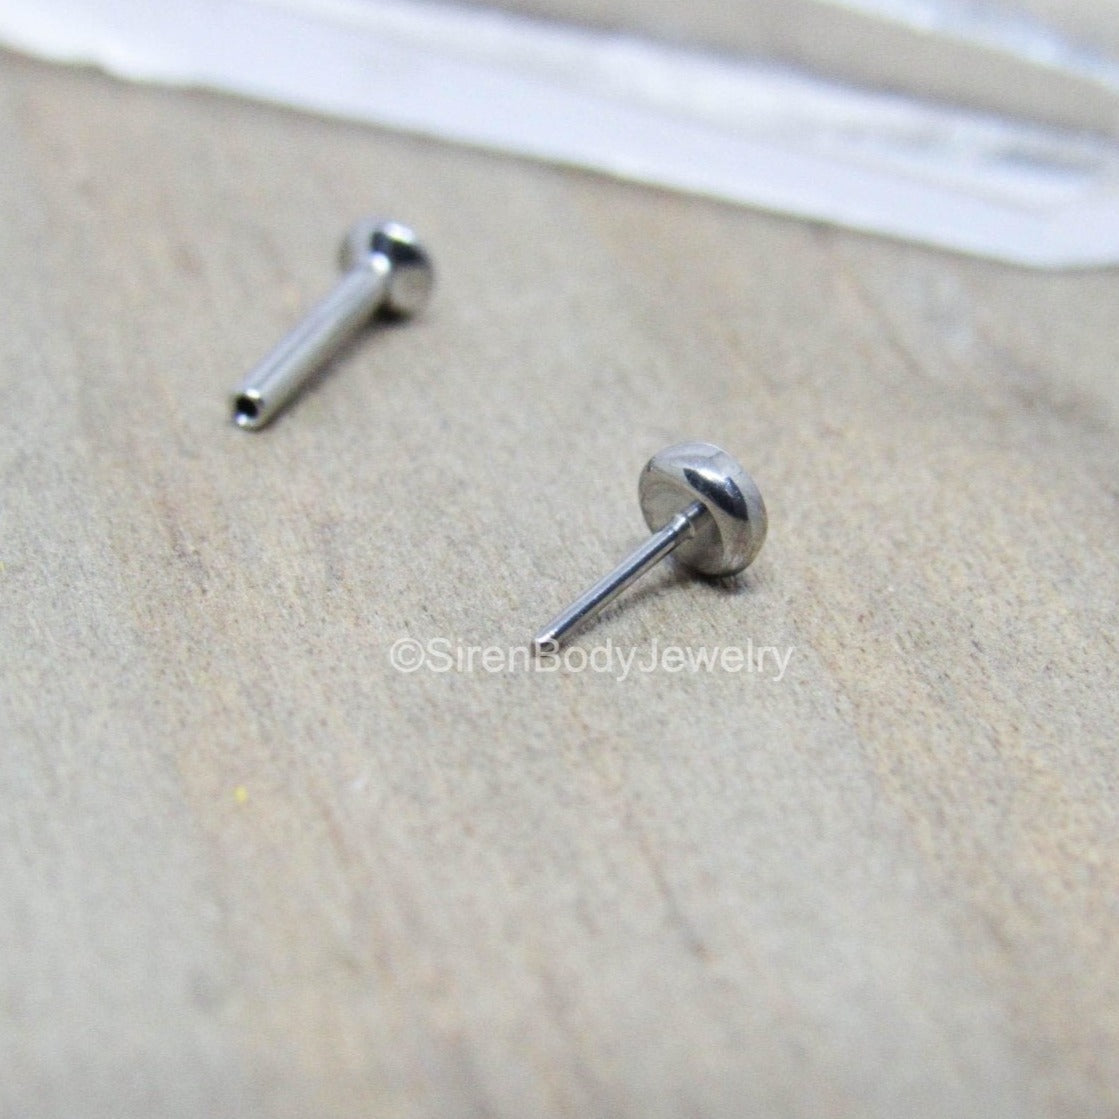 18g threadless push pin style titanium nostril piercing helix stud earring